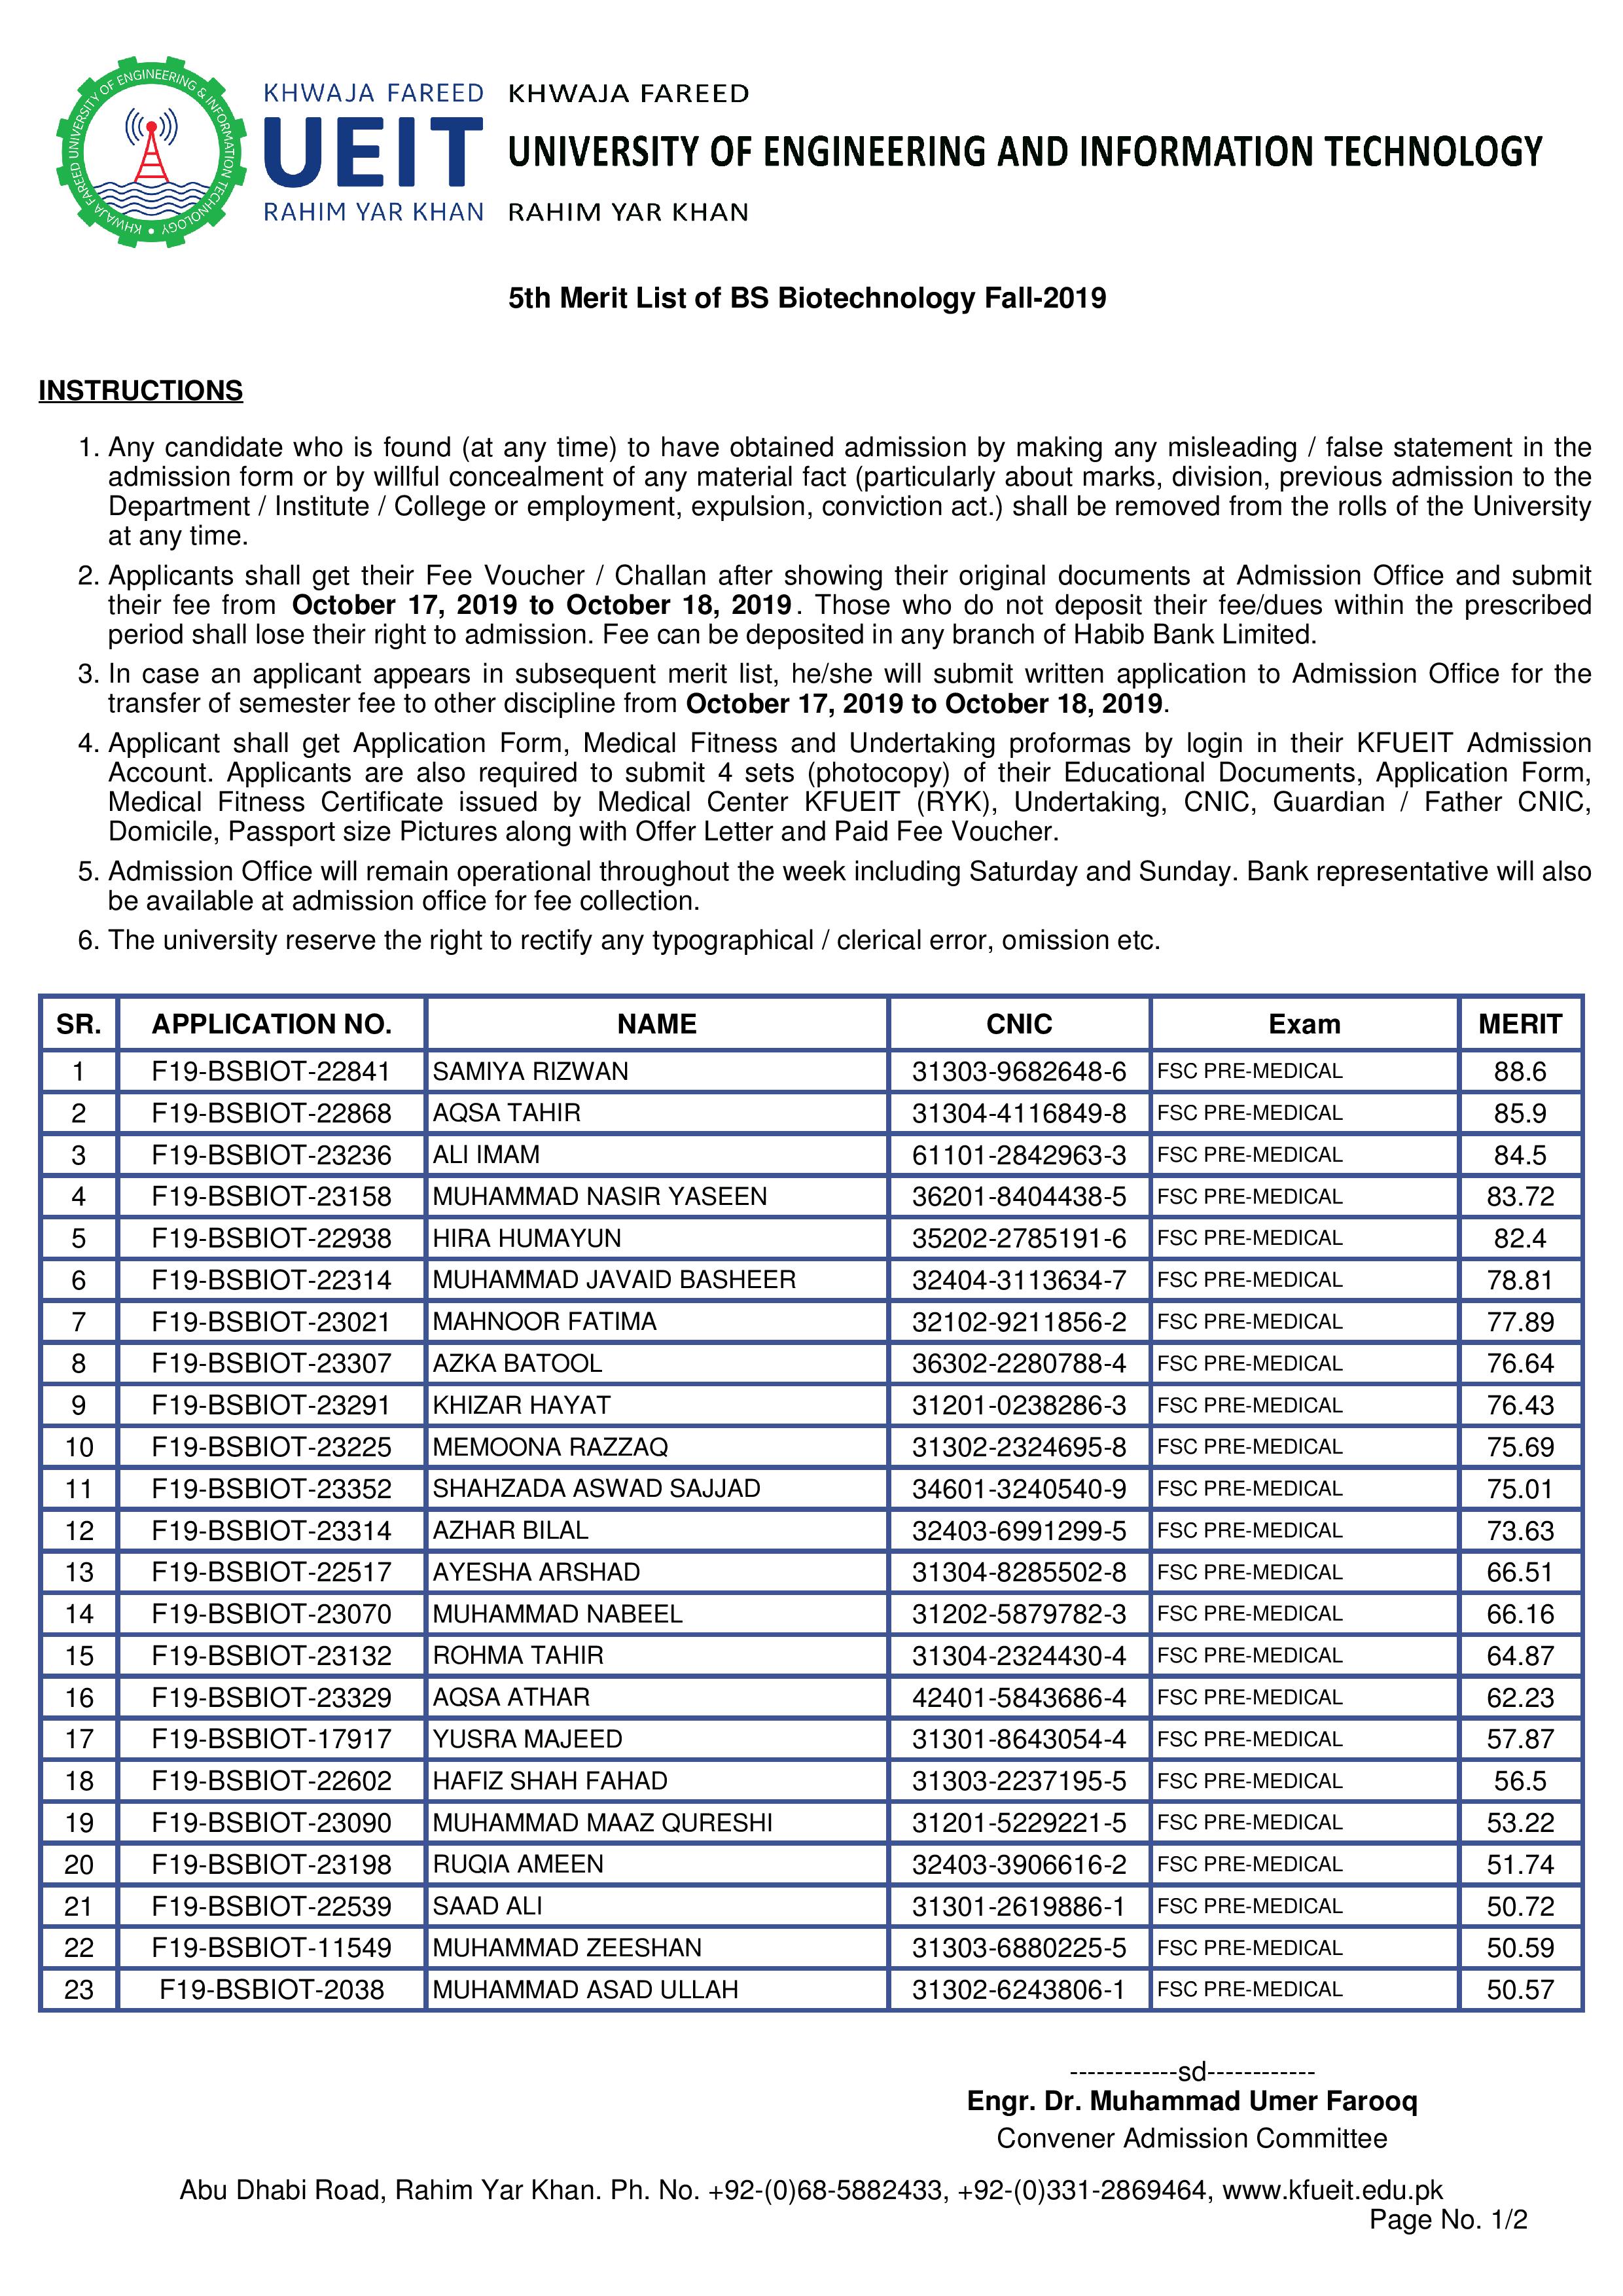 5th Merit List of BS Biotechnology Fall2019 KFUEIT